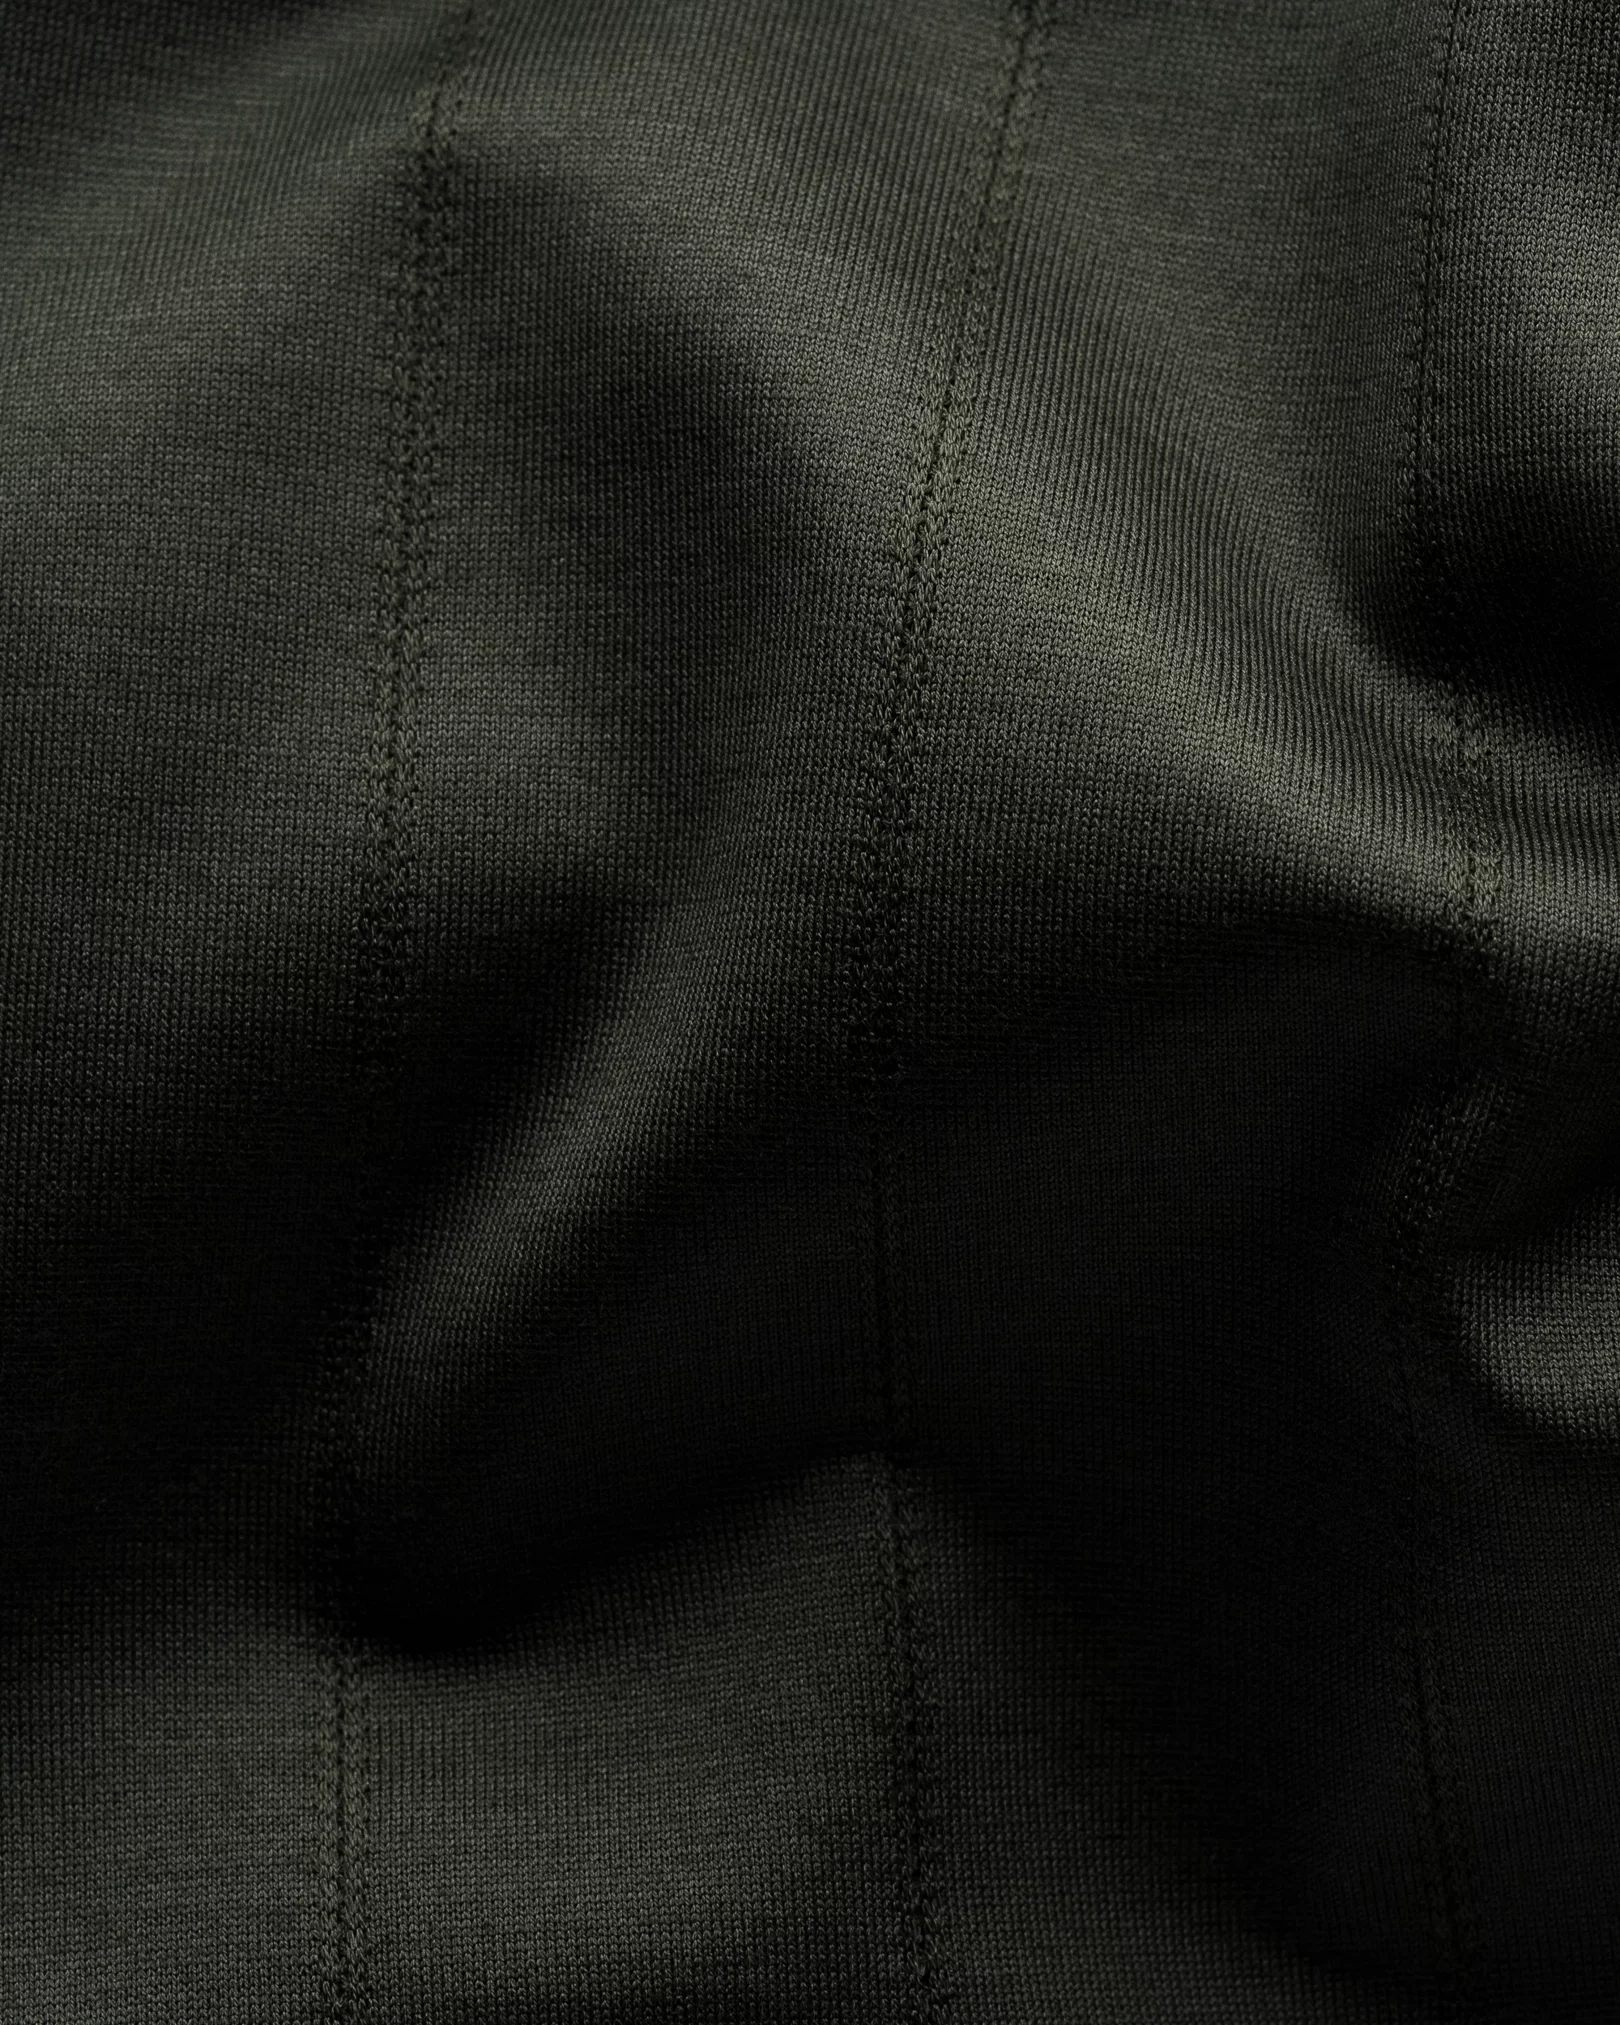 Eton - dark green knitted jersey long sleeve